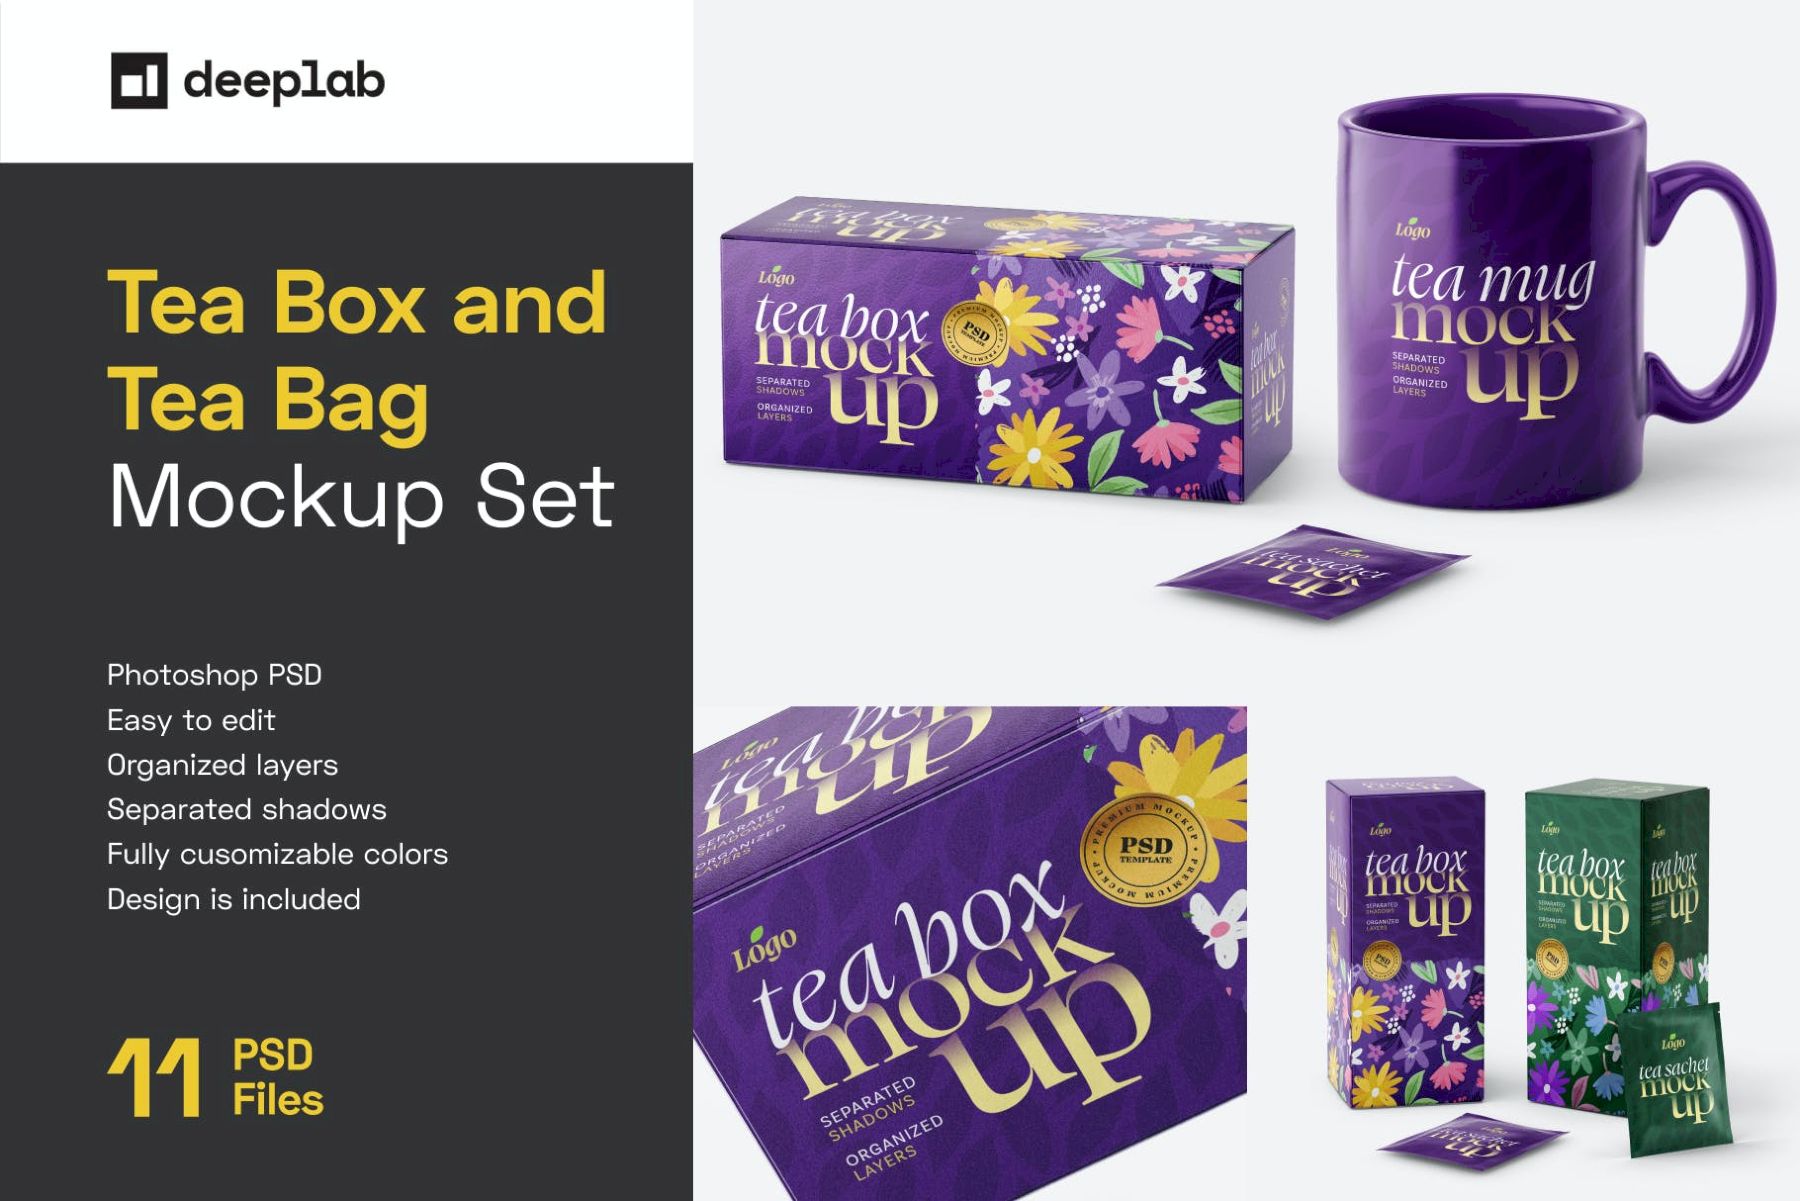 茶盒和茶包样机套装 Tea Box and Tea Bag Mockup Set插图